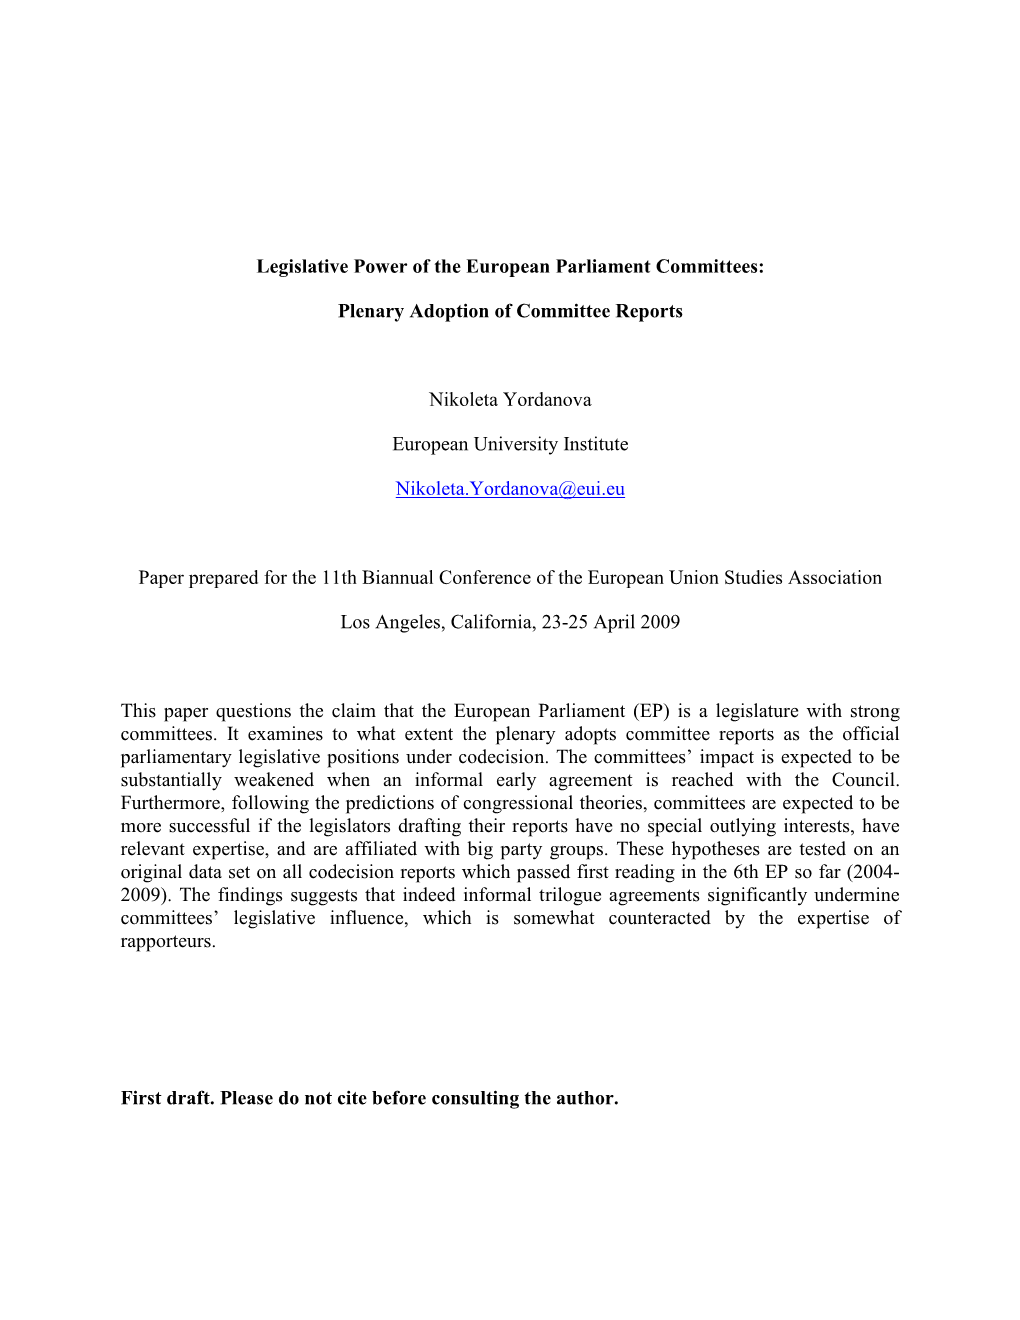 Legislative Power of the European Parliament Committees: Plenary